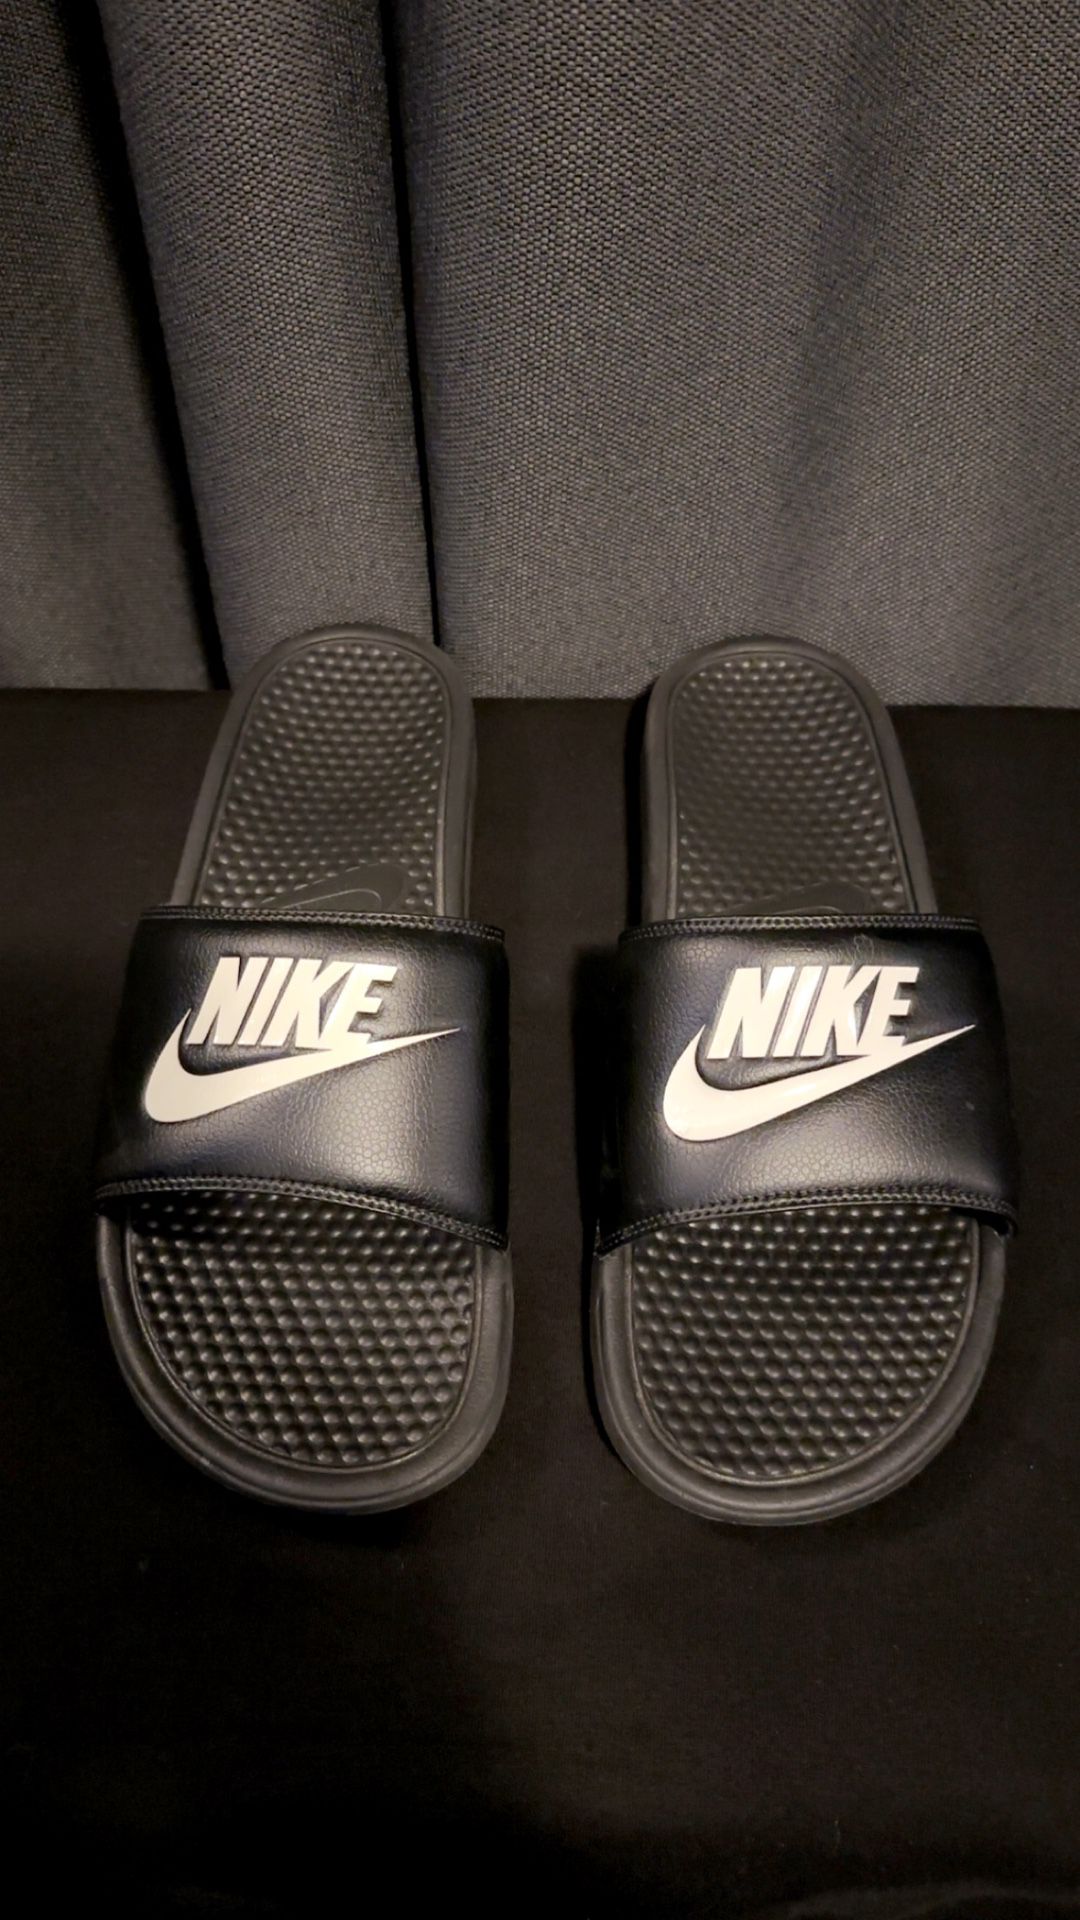 Nike Slides 